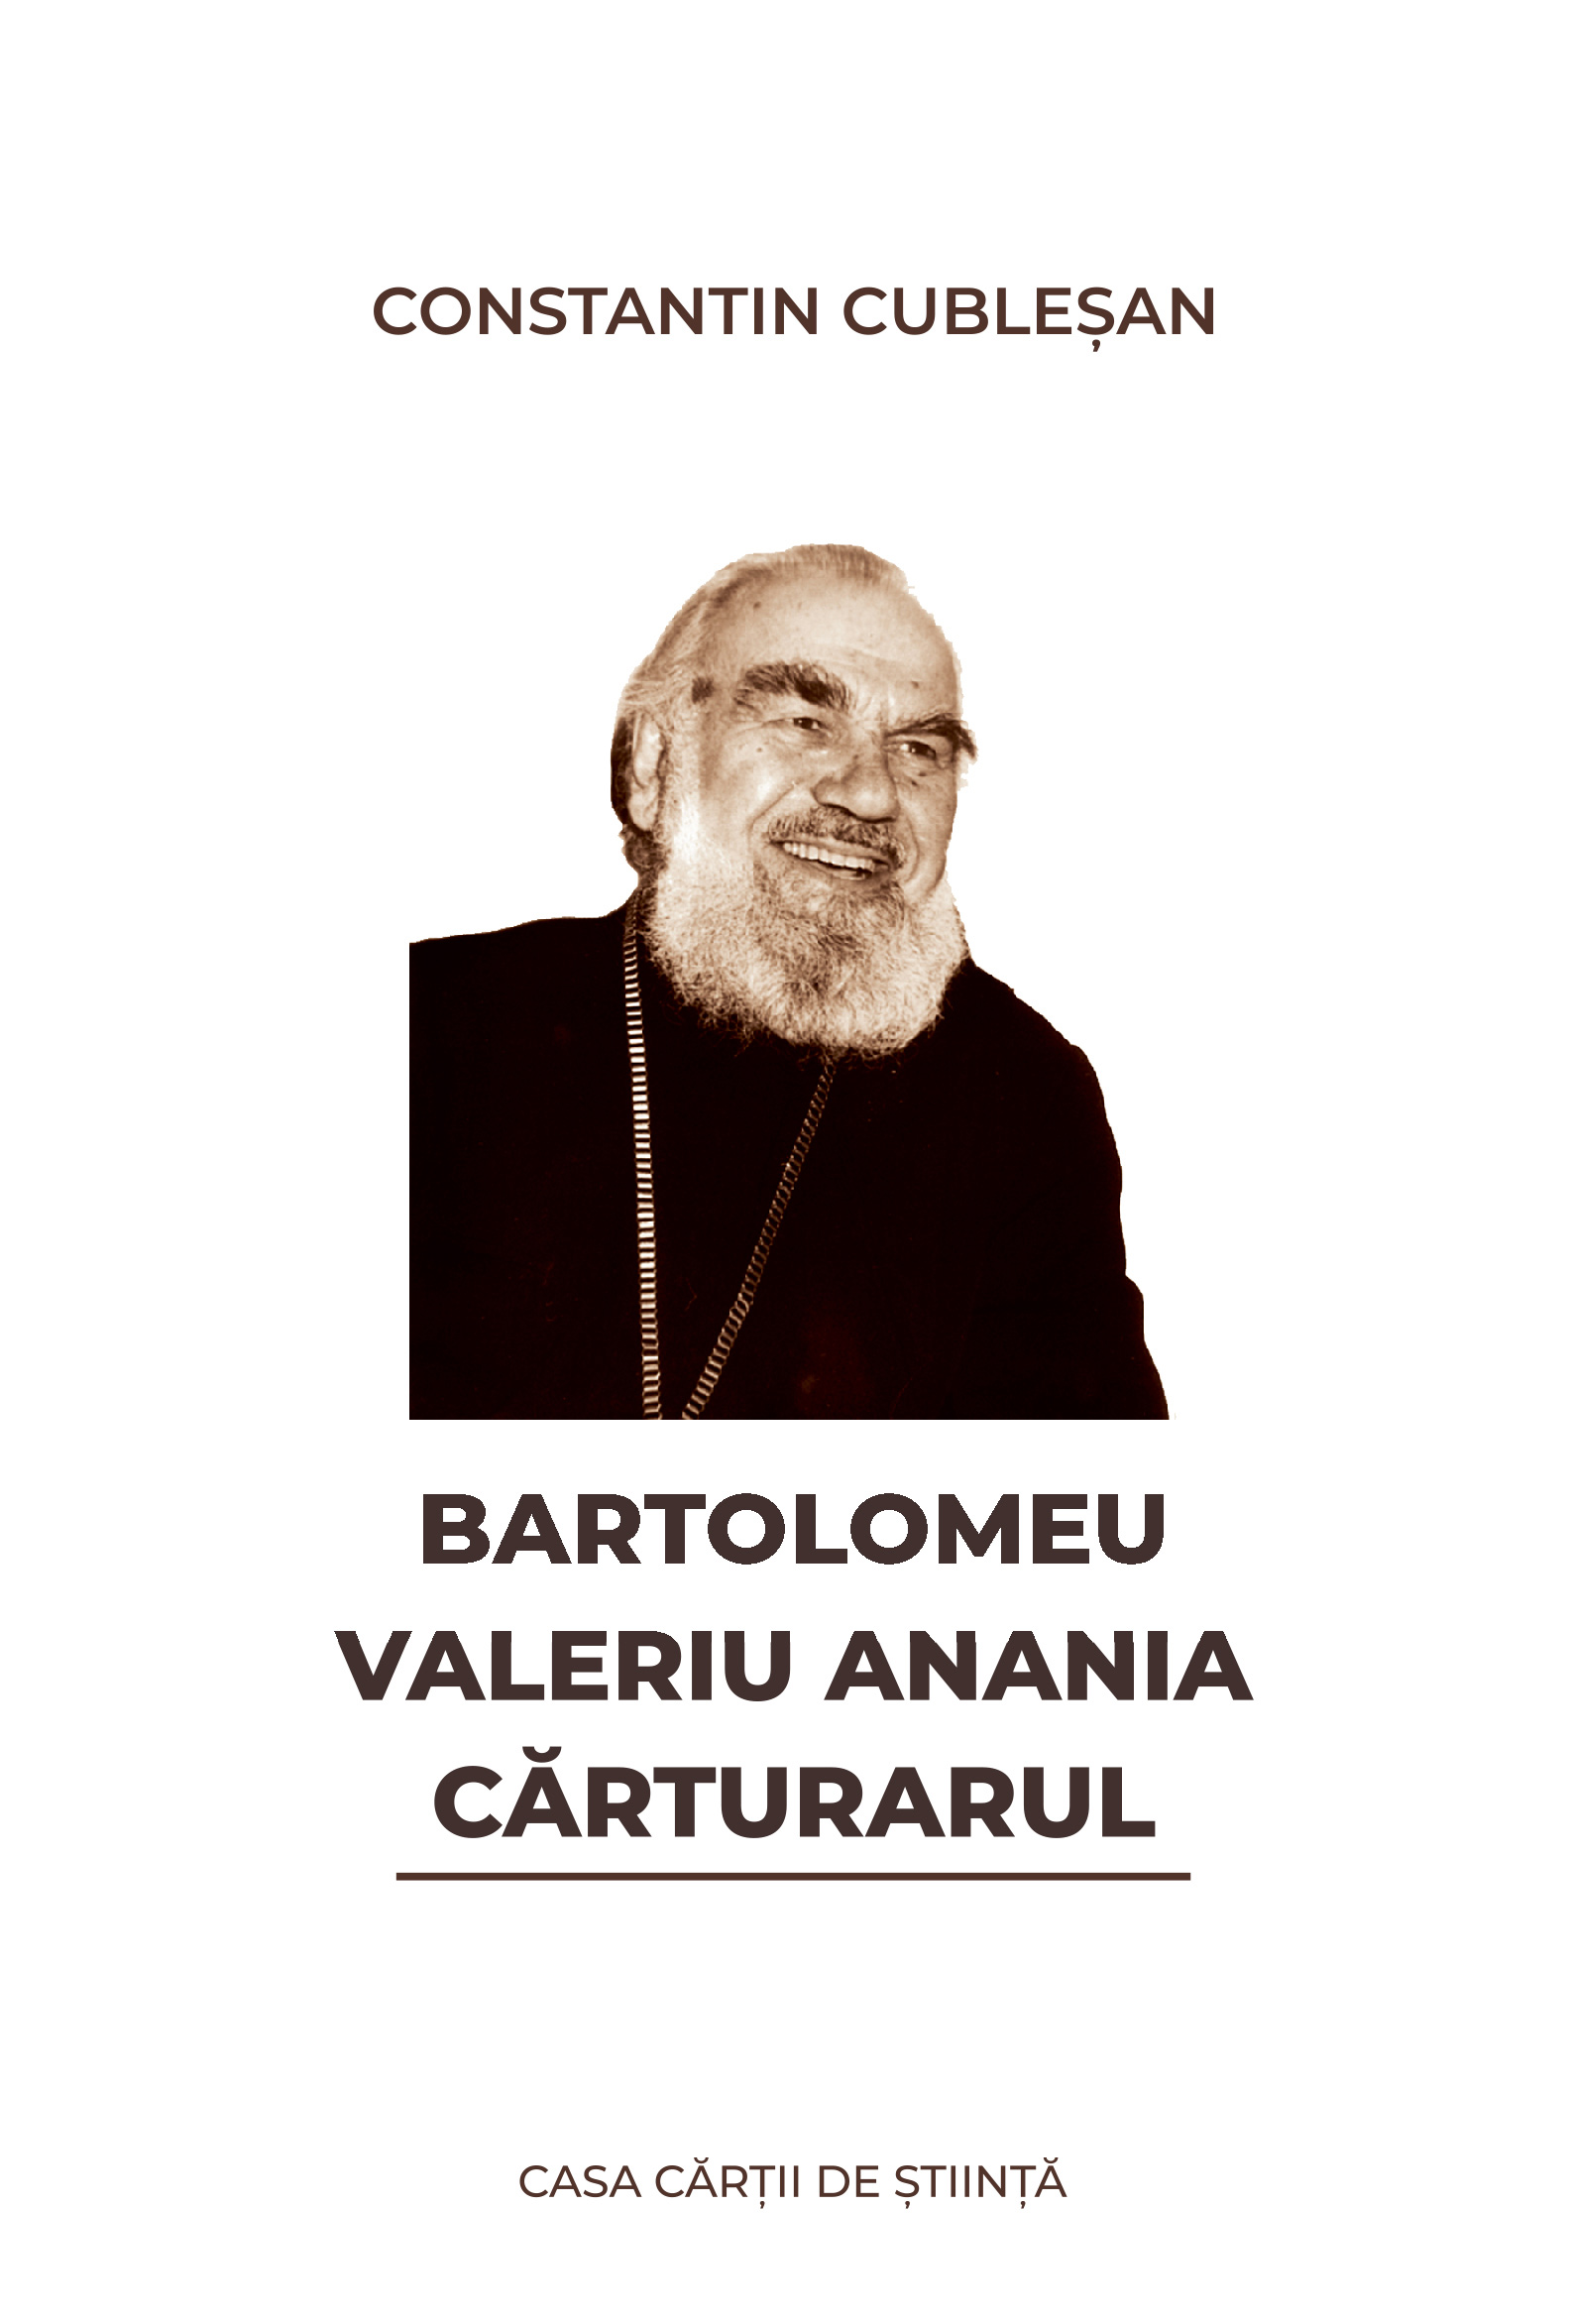 Bartolomeu Valeriu Anania carturarul